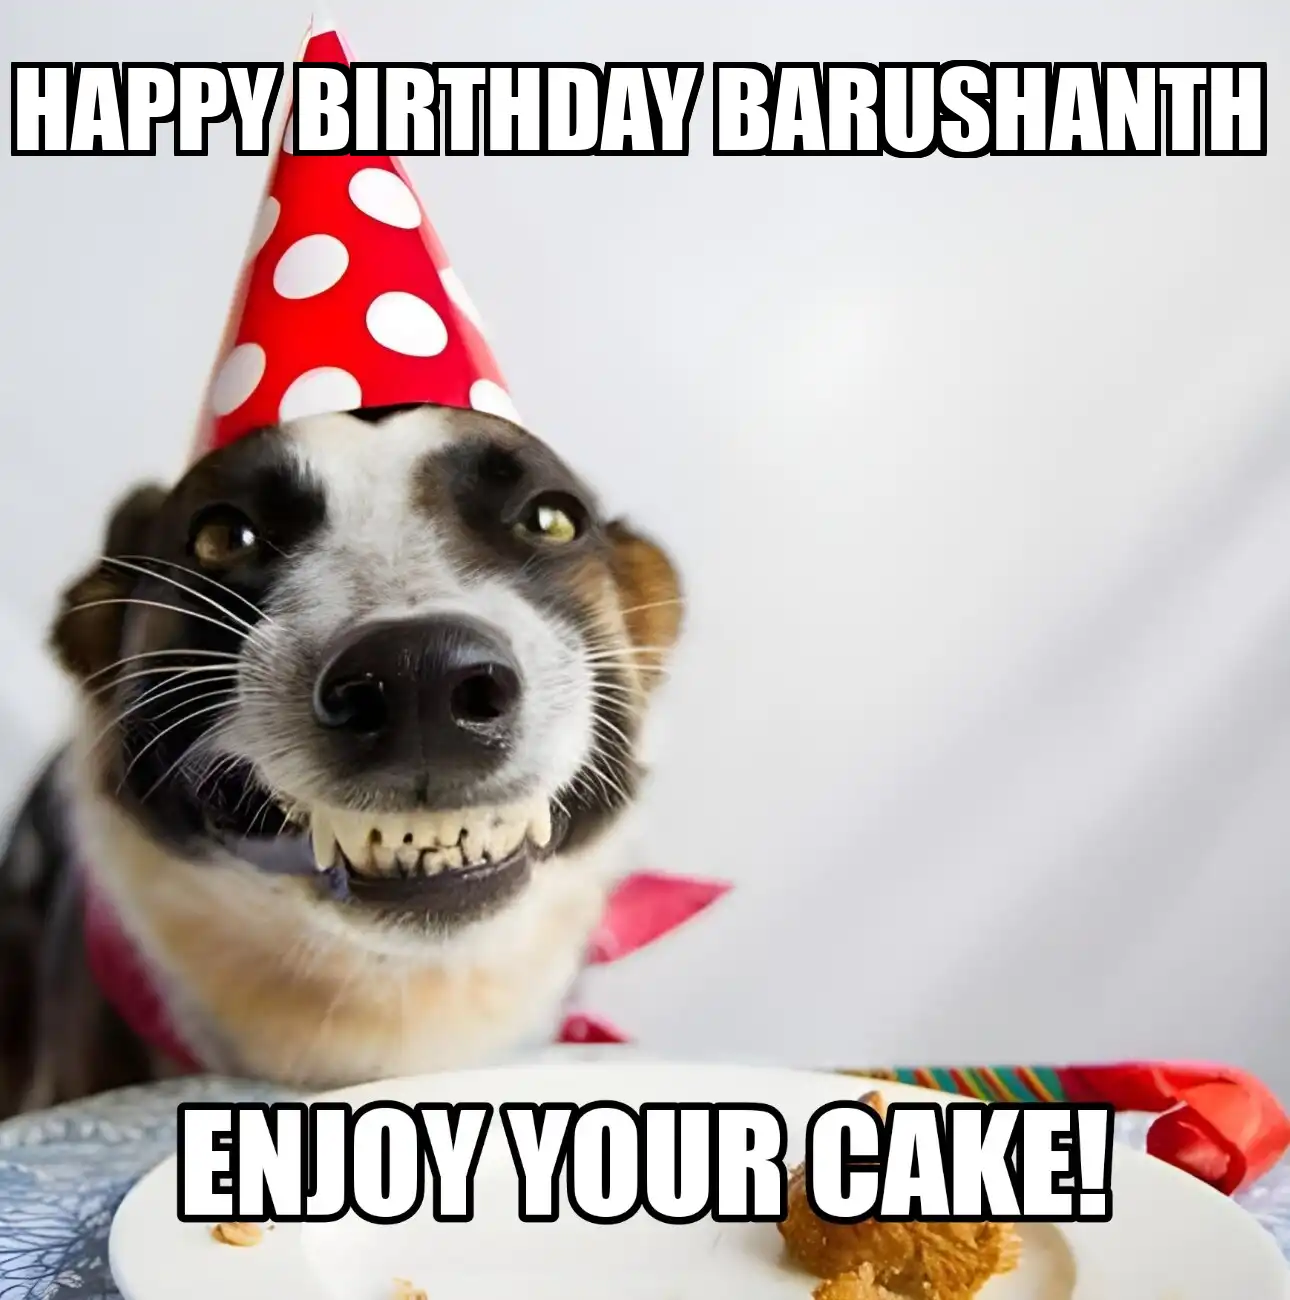 Happy Birthday Barushanth Enjoy Your Cake Dog Meme